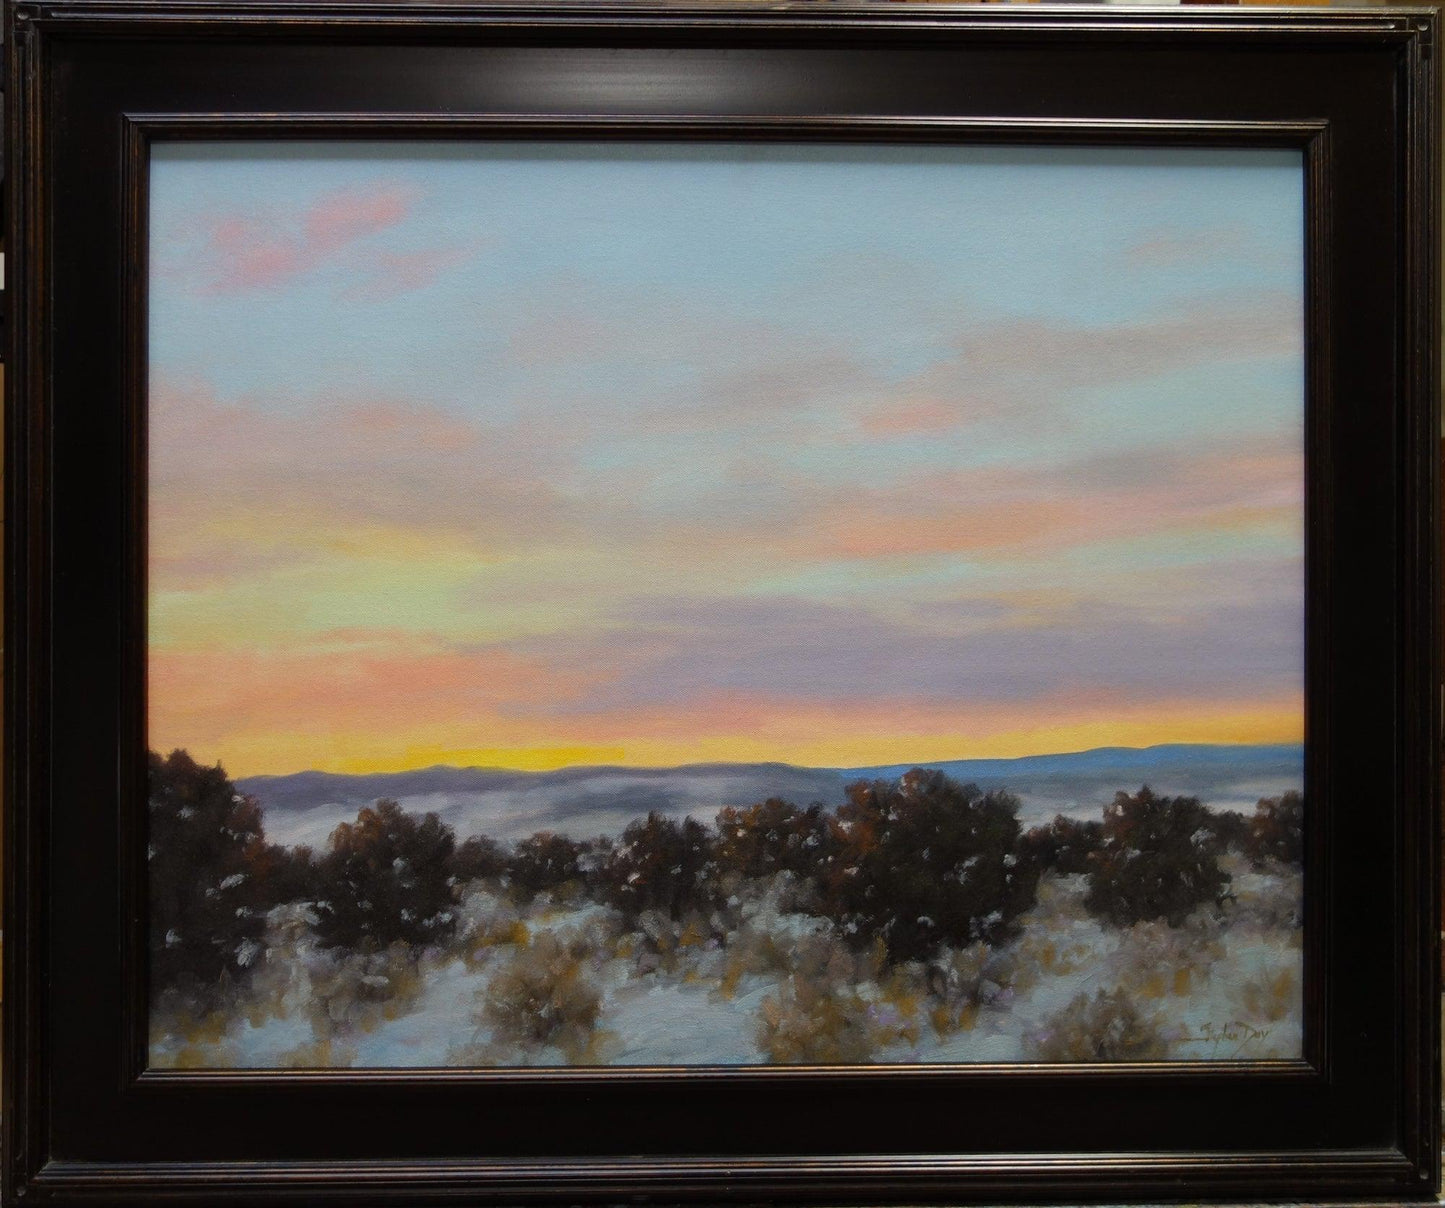 Winter Evening Sky-Painting-Stephen Day-Sorrel Sky Gallery